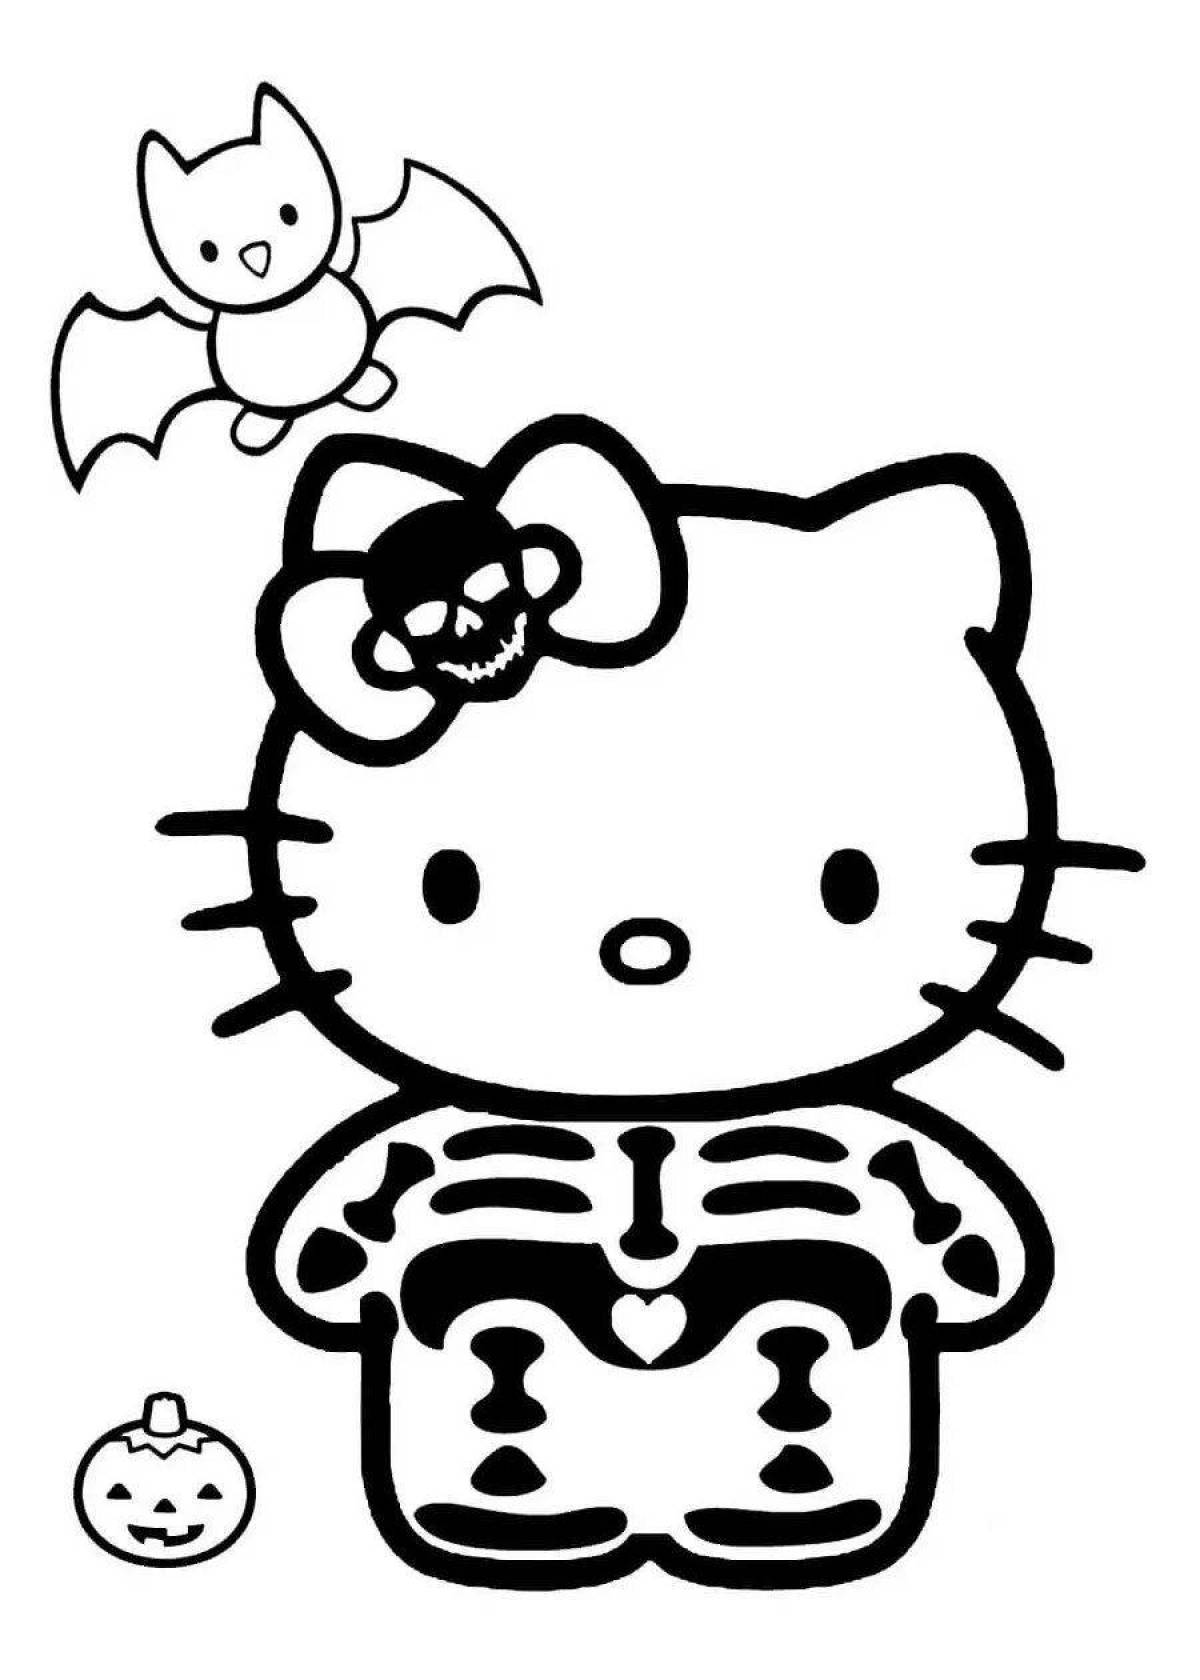 Playful hello kitty poster